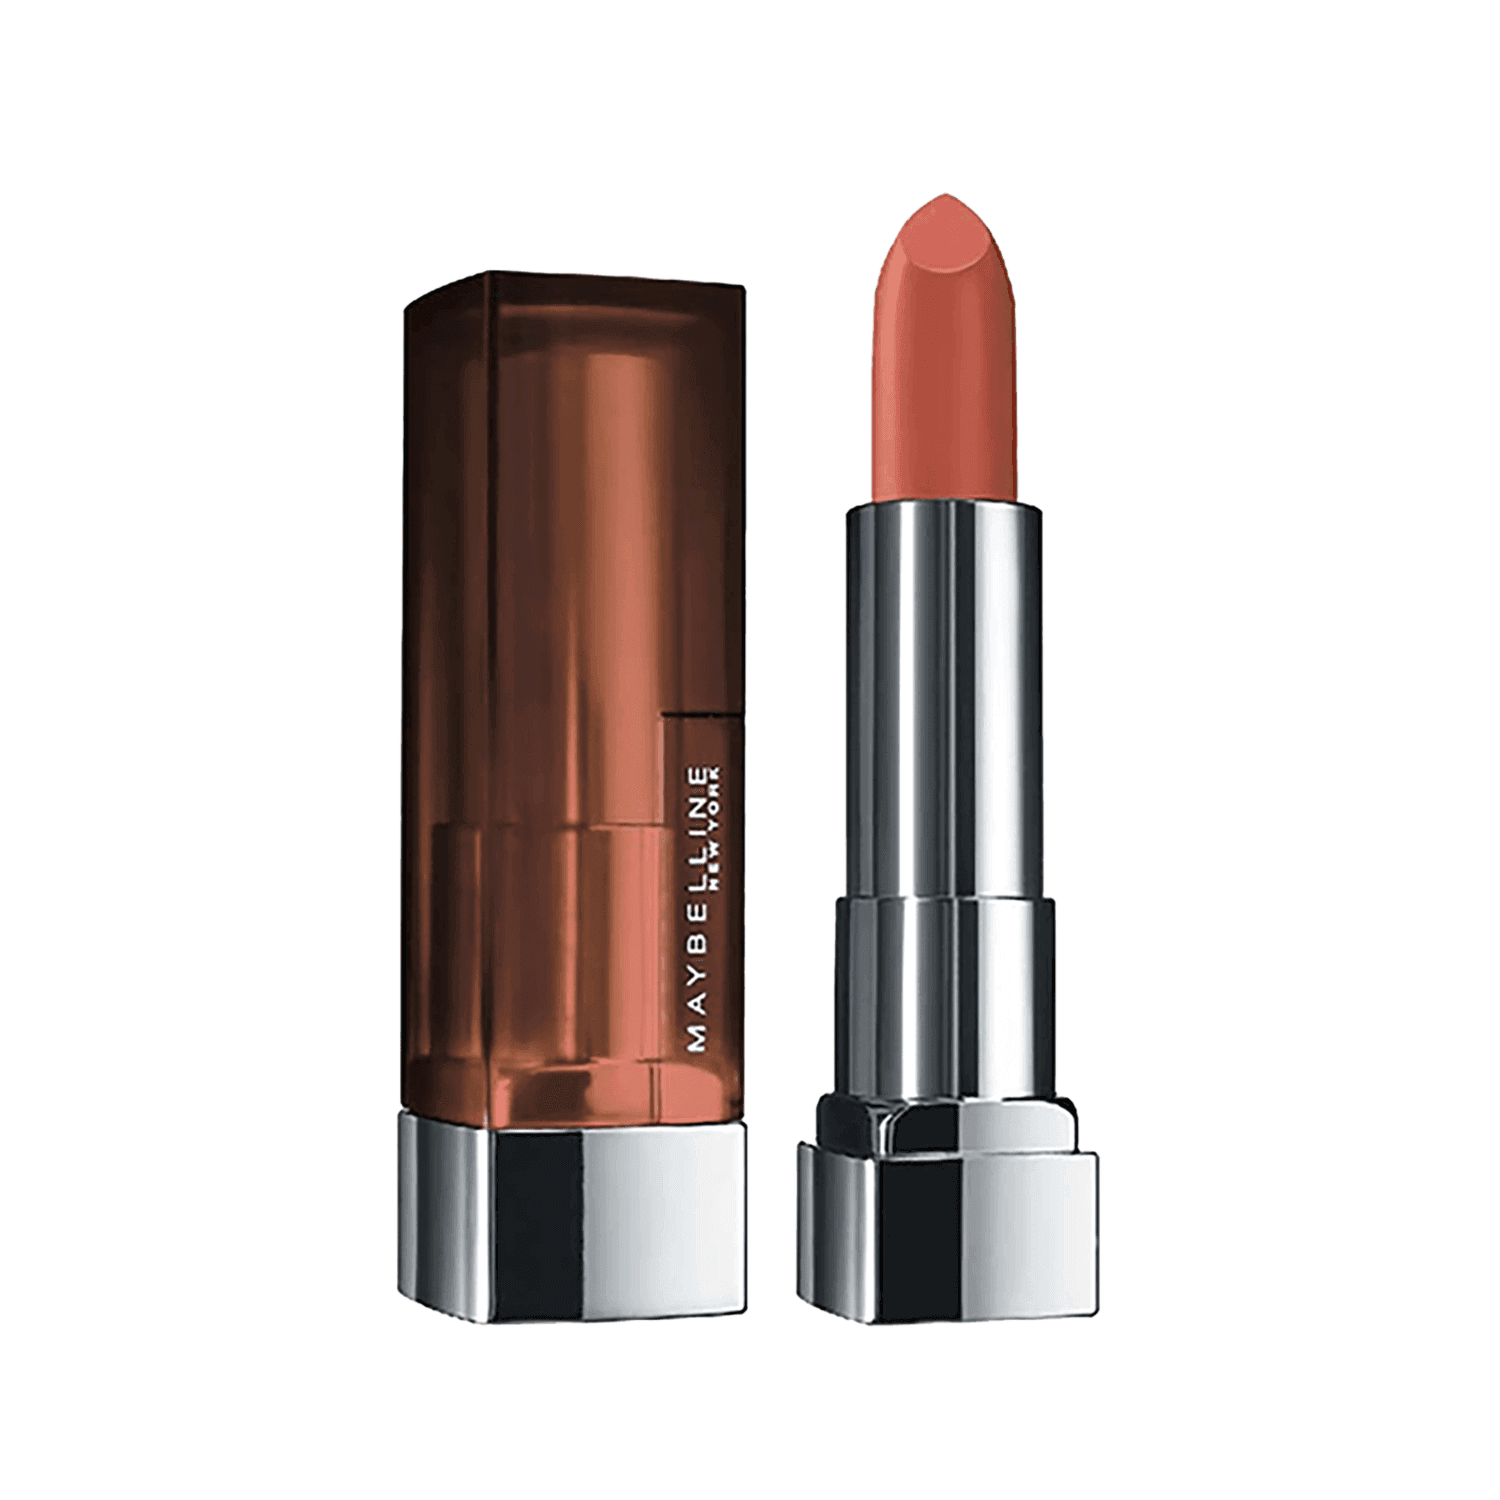 maybelline new york color sensational creamy matte lipstick - 657 nude nuance (3.9g)